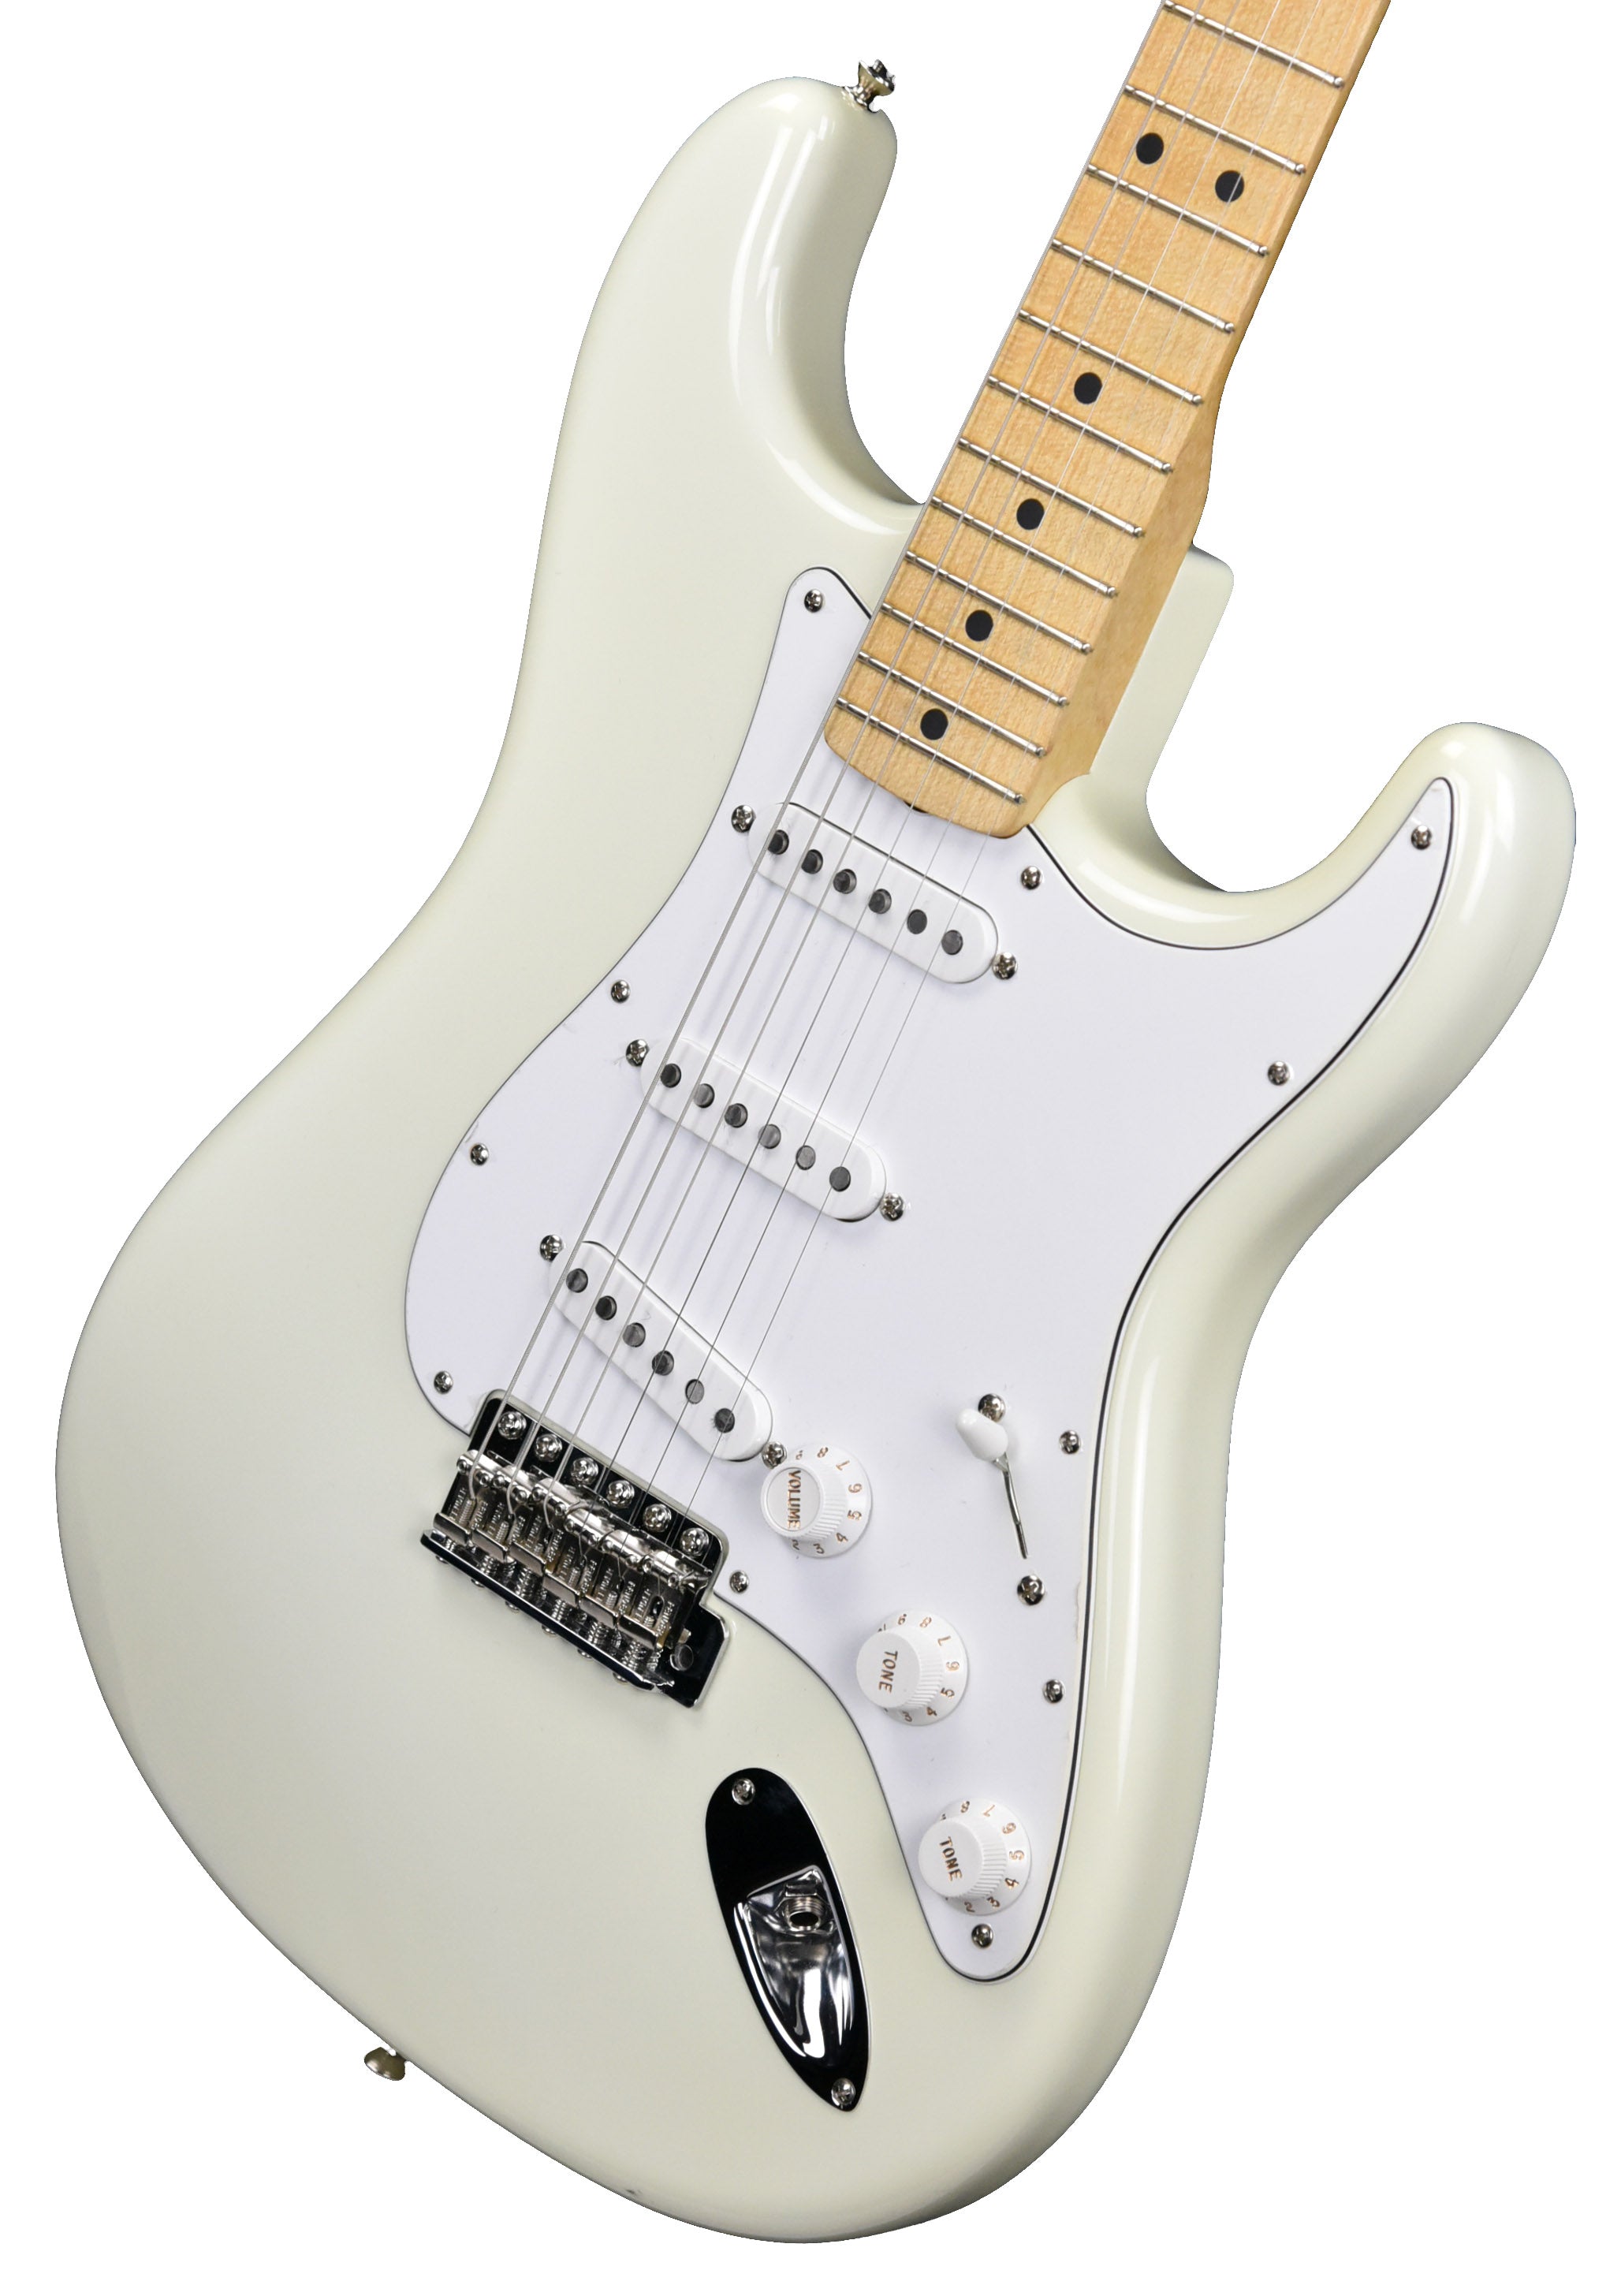 Used 2012 Fender Custom Shop 69 Stratocaster NOS in Olympic White 